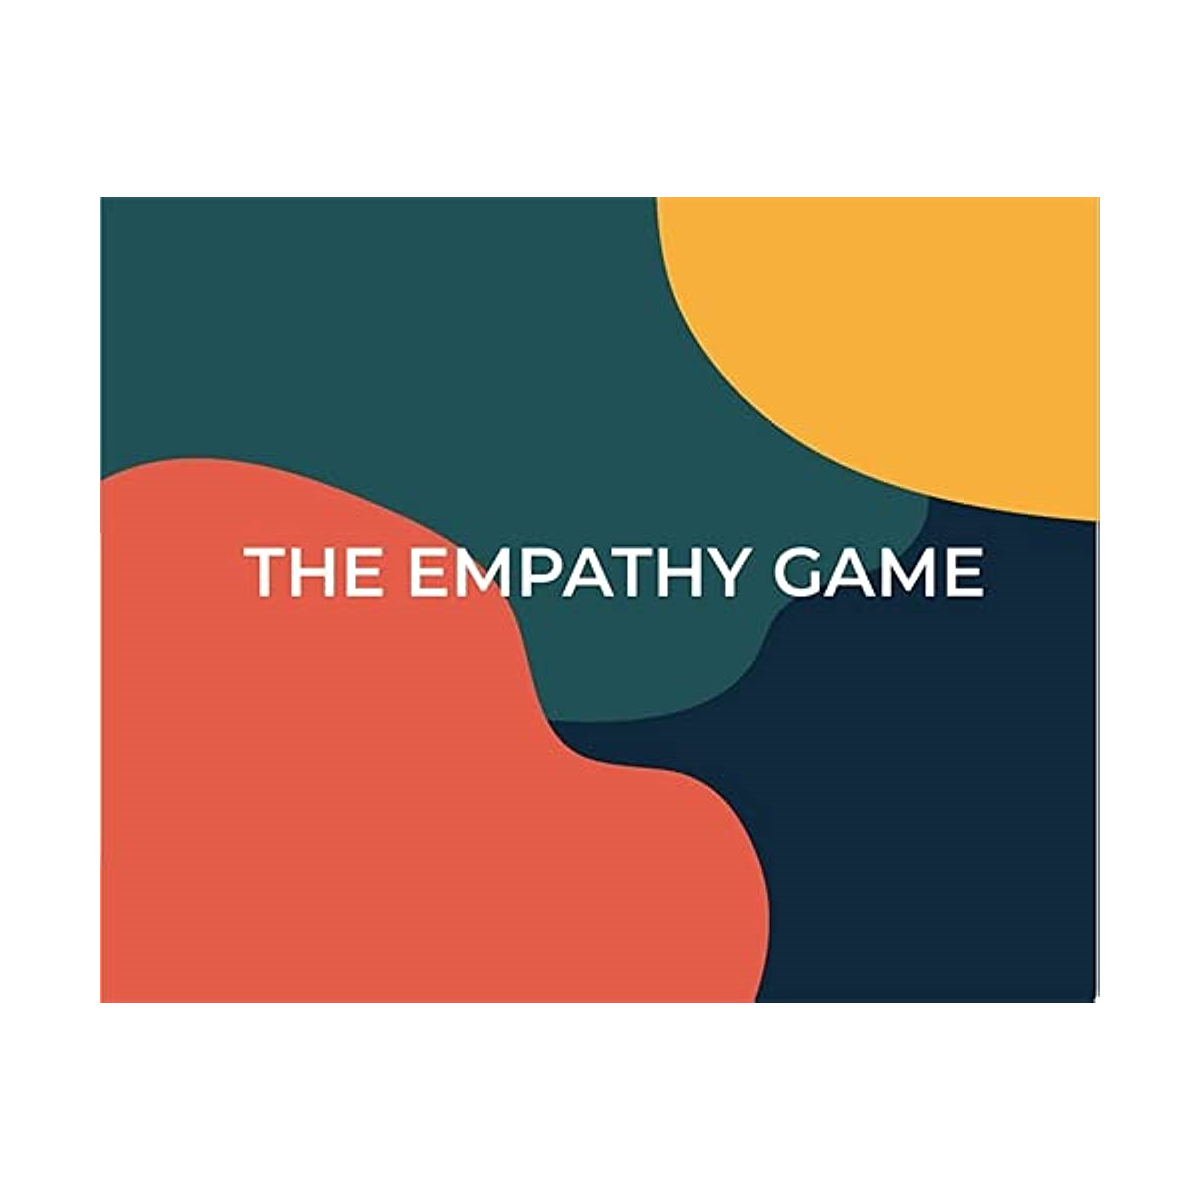 The Empathy Game